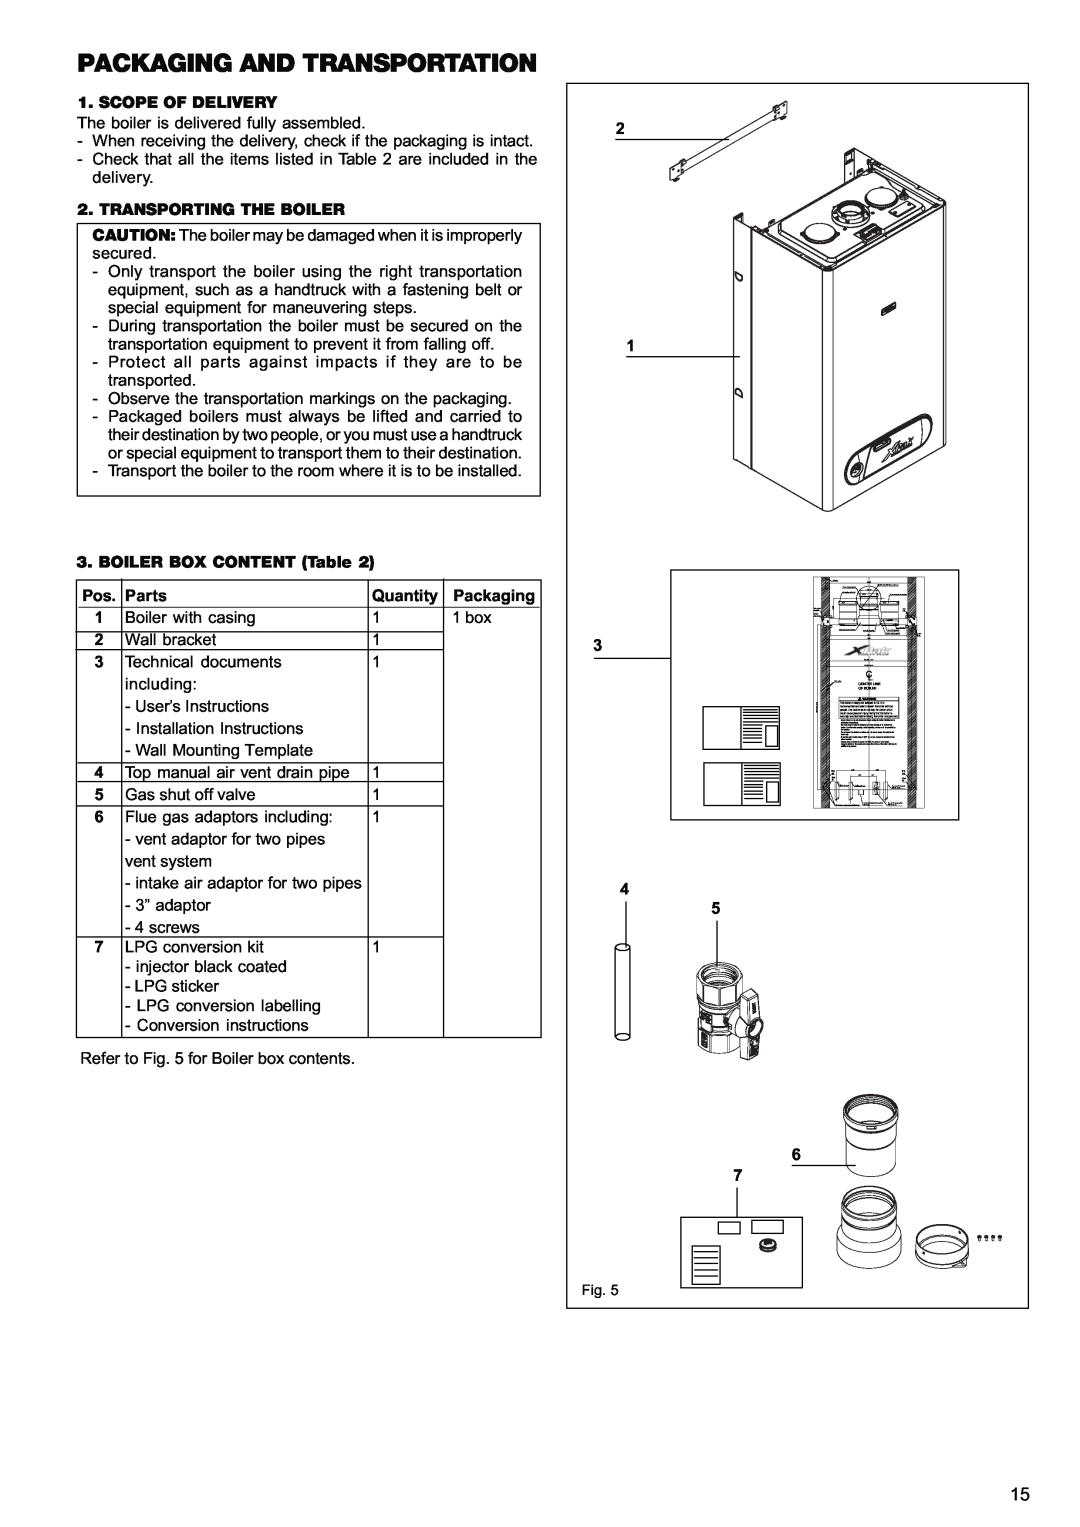 Raypak 120, 85 manual Packaging And Transportation 